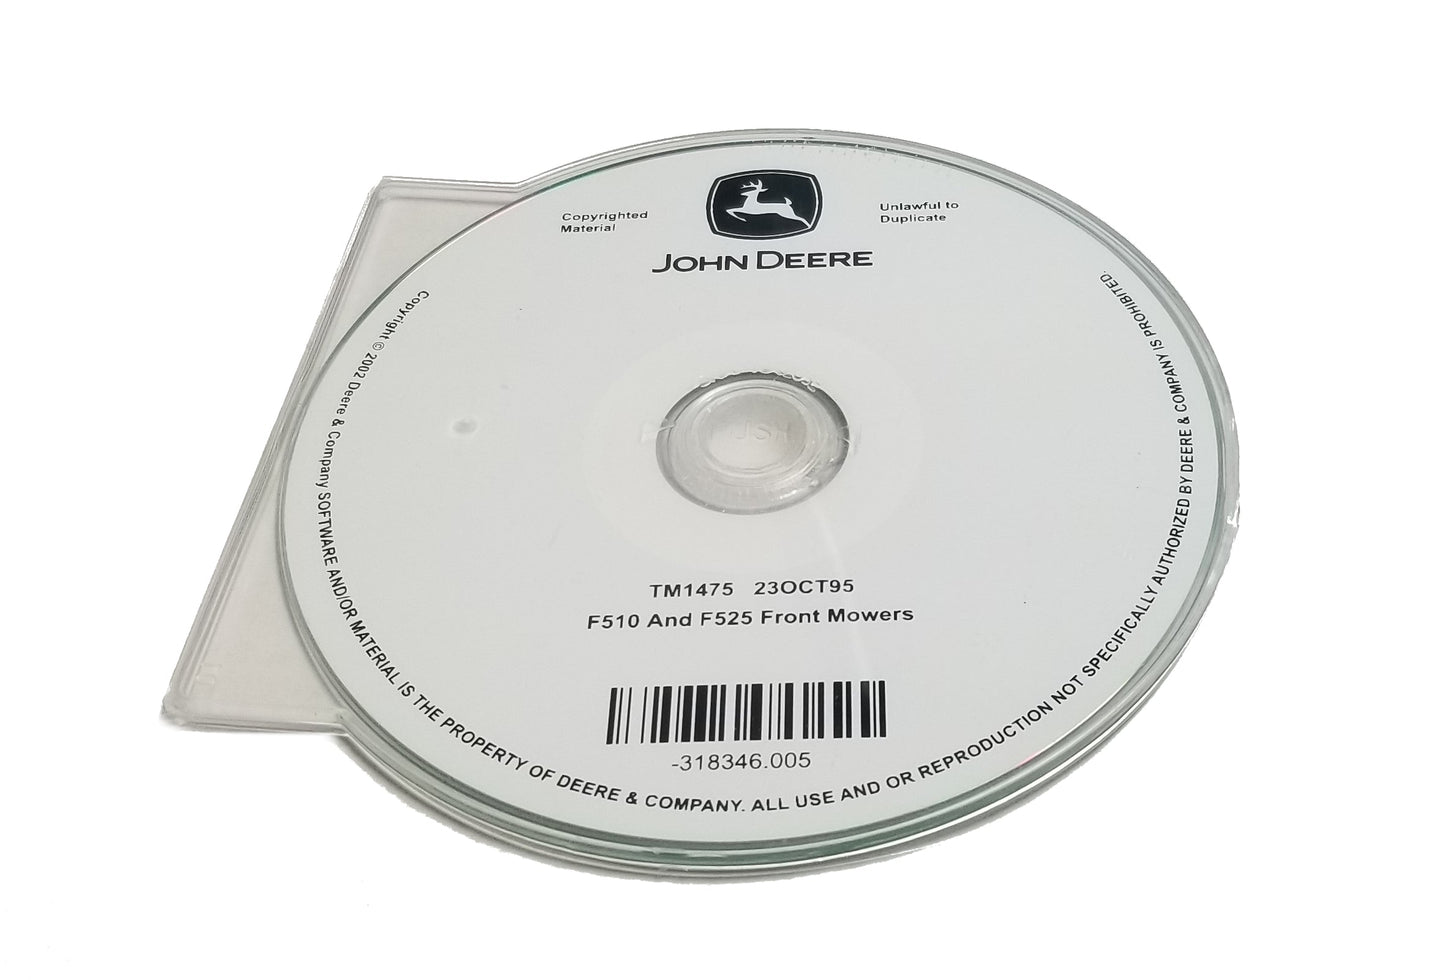 John Deere F510/F525 Front Mowers Technical CD Manual - TM1475CD